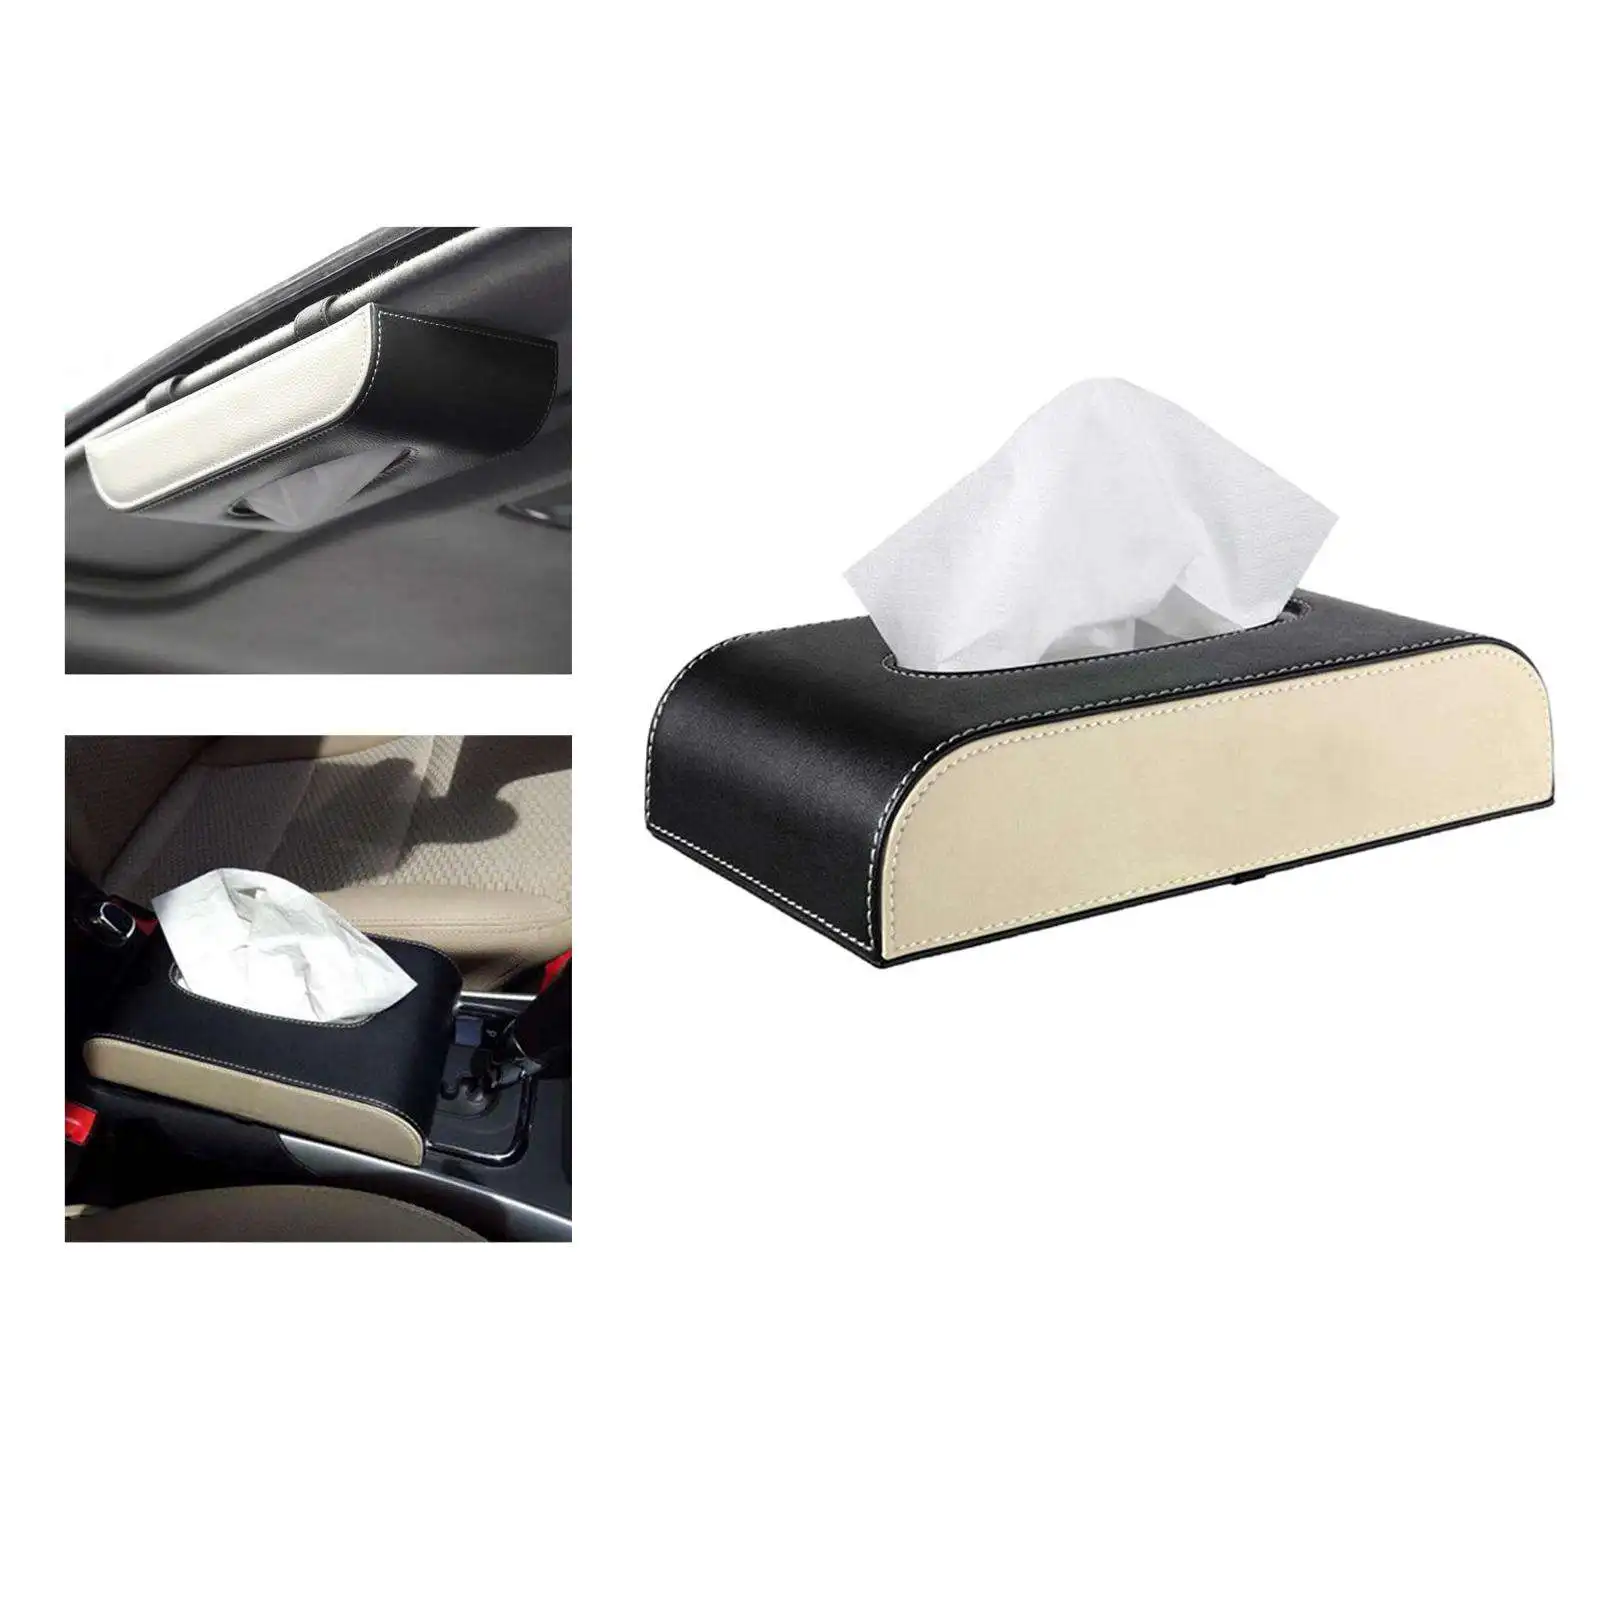 Auto PU Leather Paper Towel Case Tissue Box for Home Decor Accessories